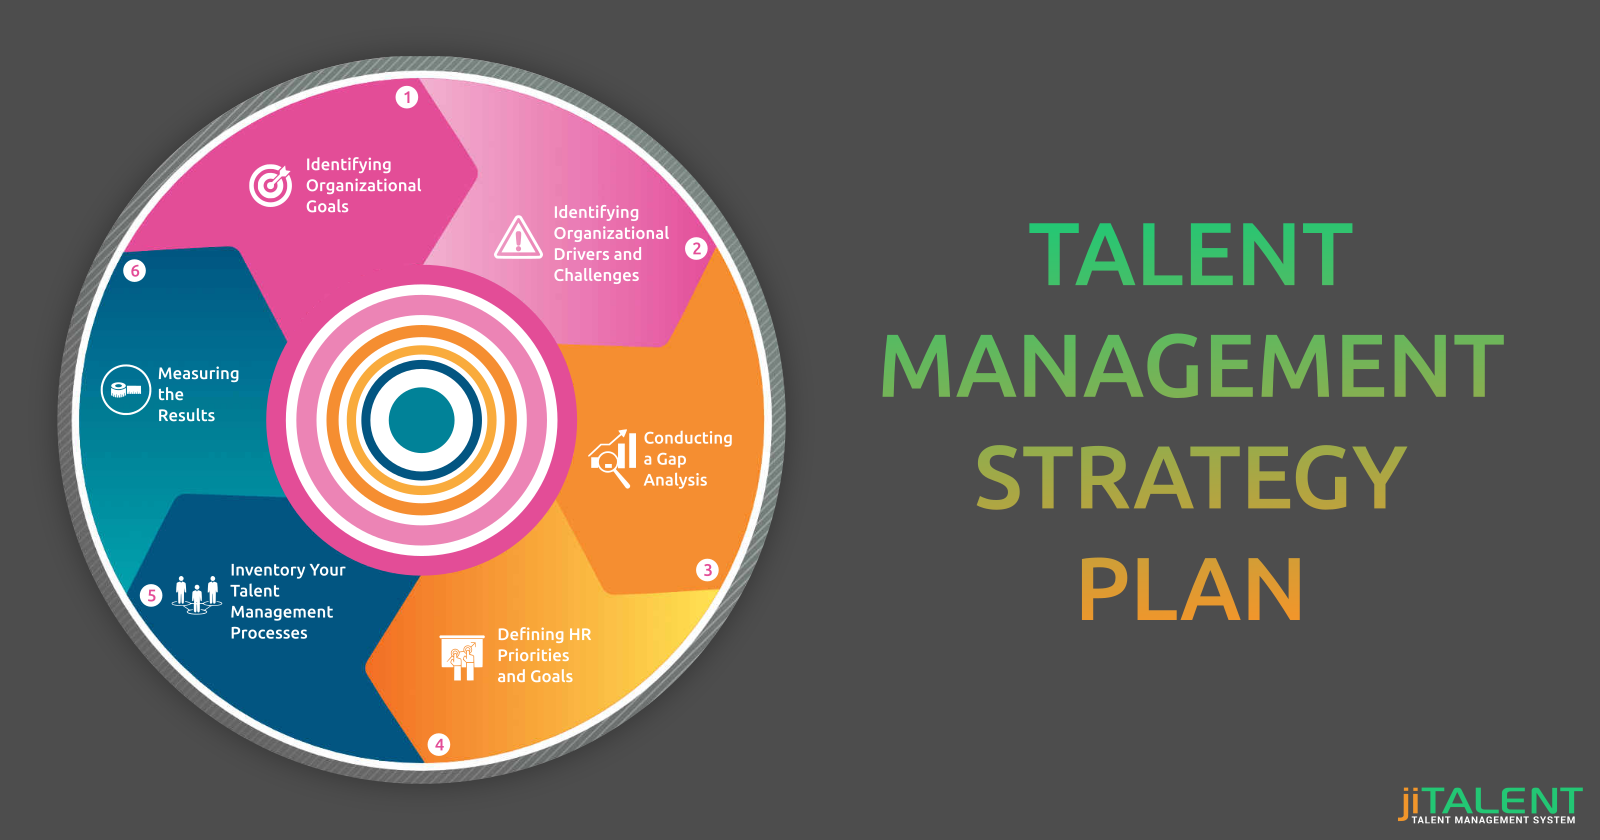 Developing an Effective Talent Management Strategy Plan